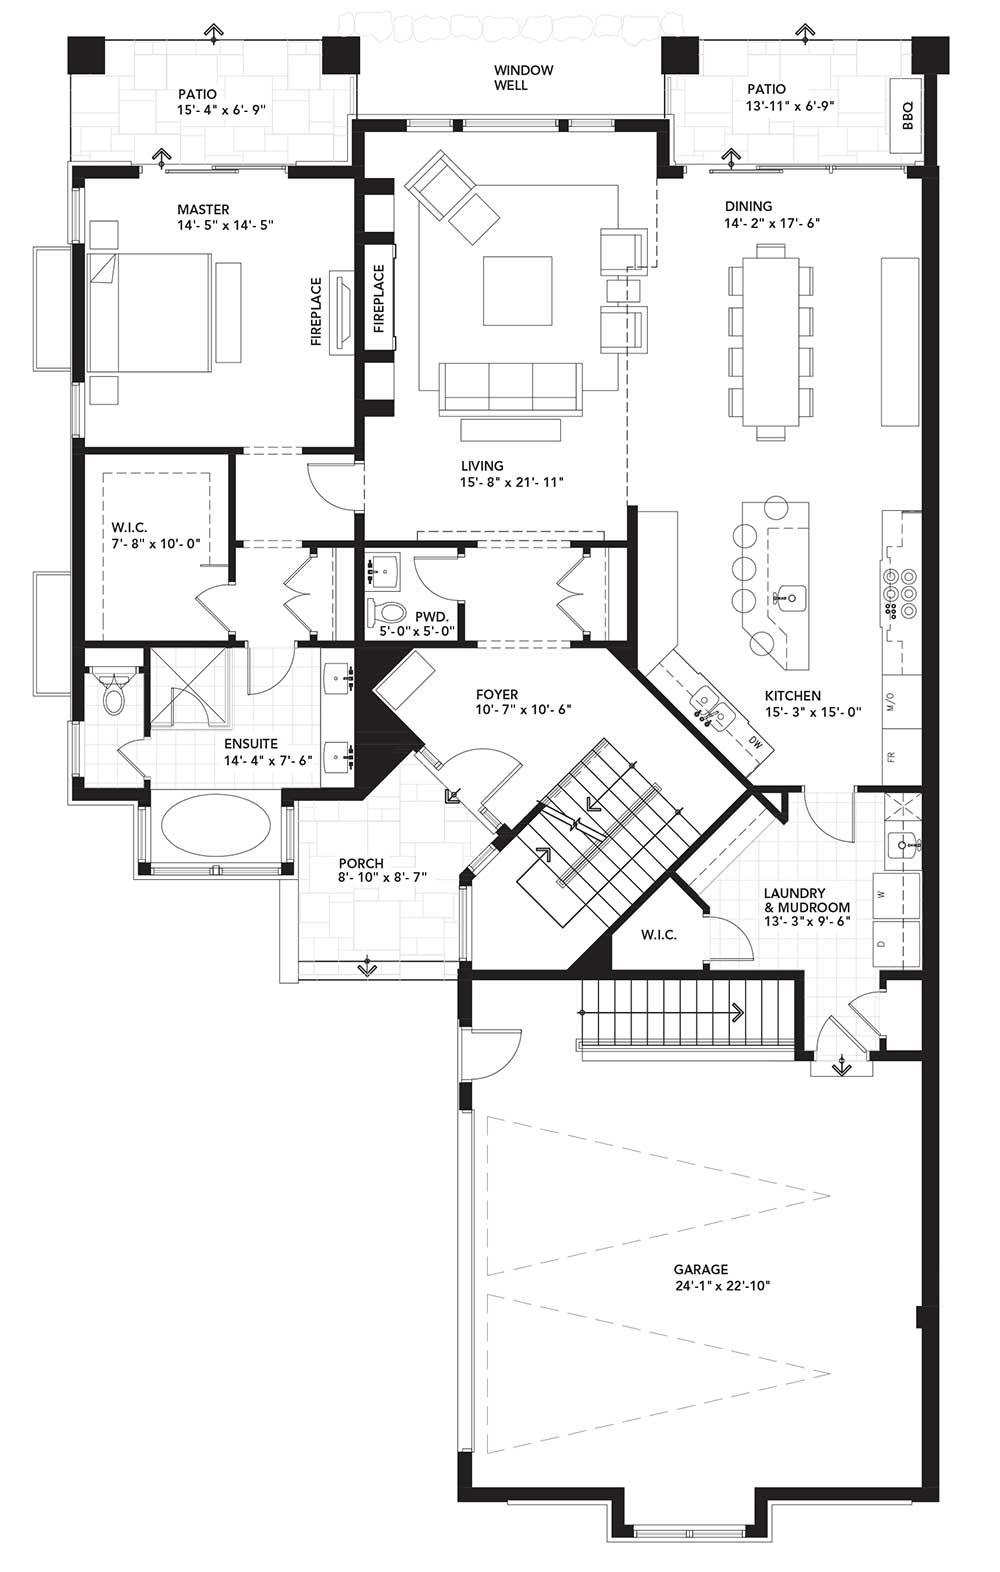 Main Floor Plan - Left Unit